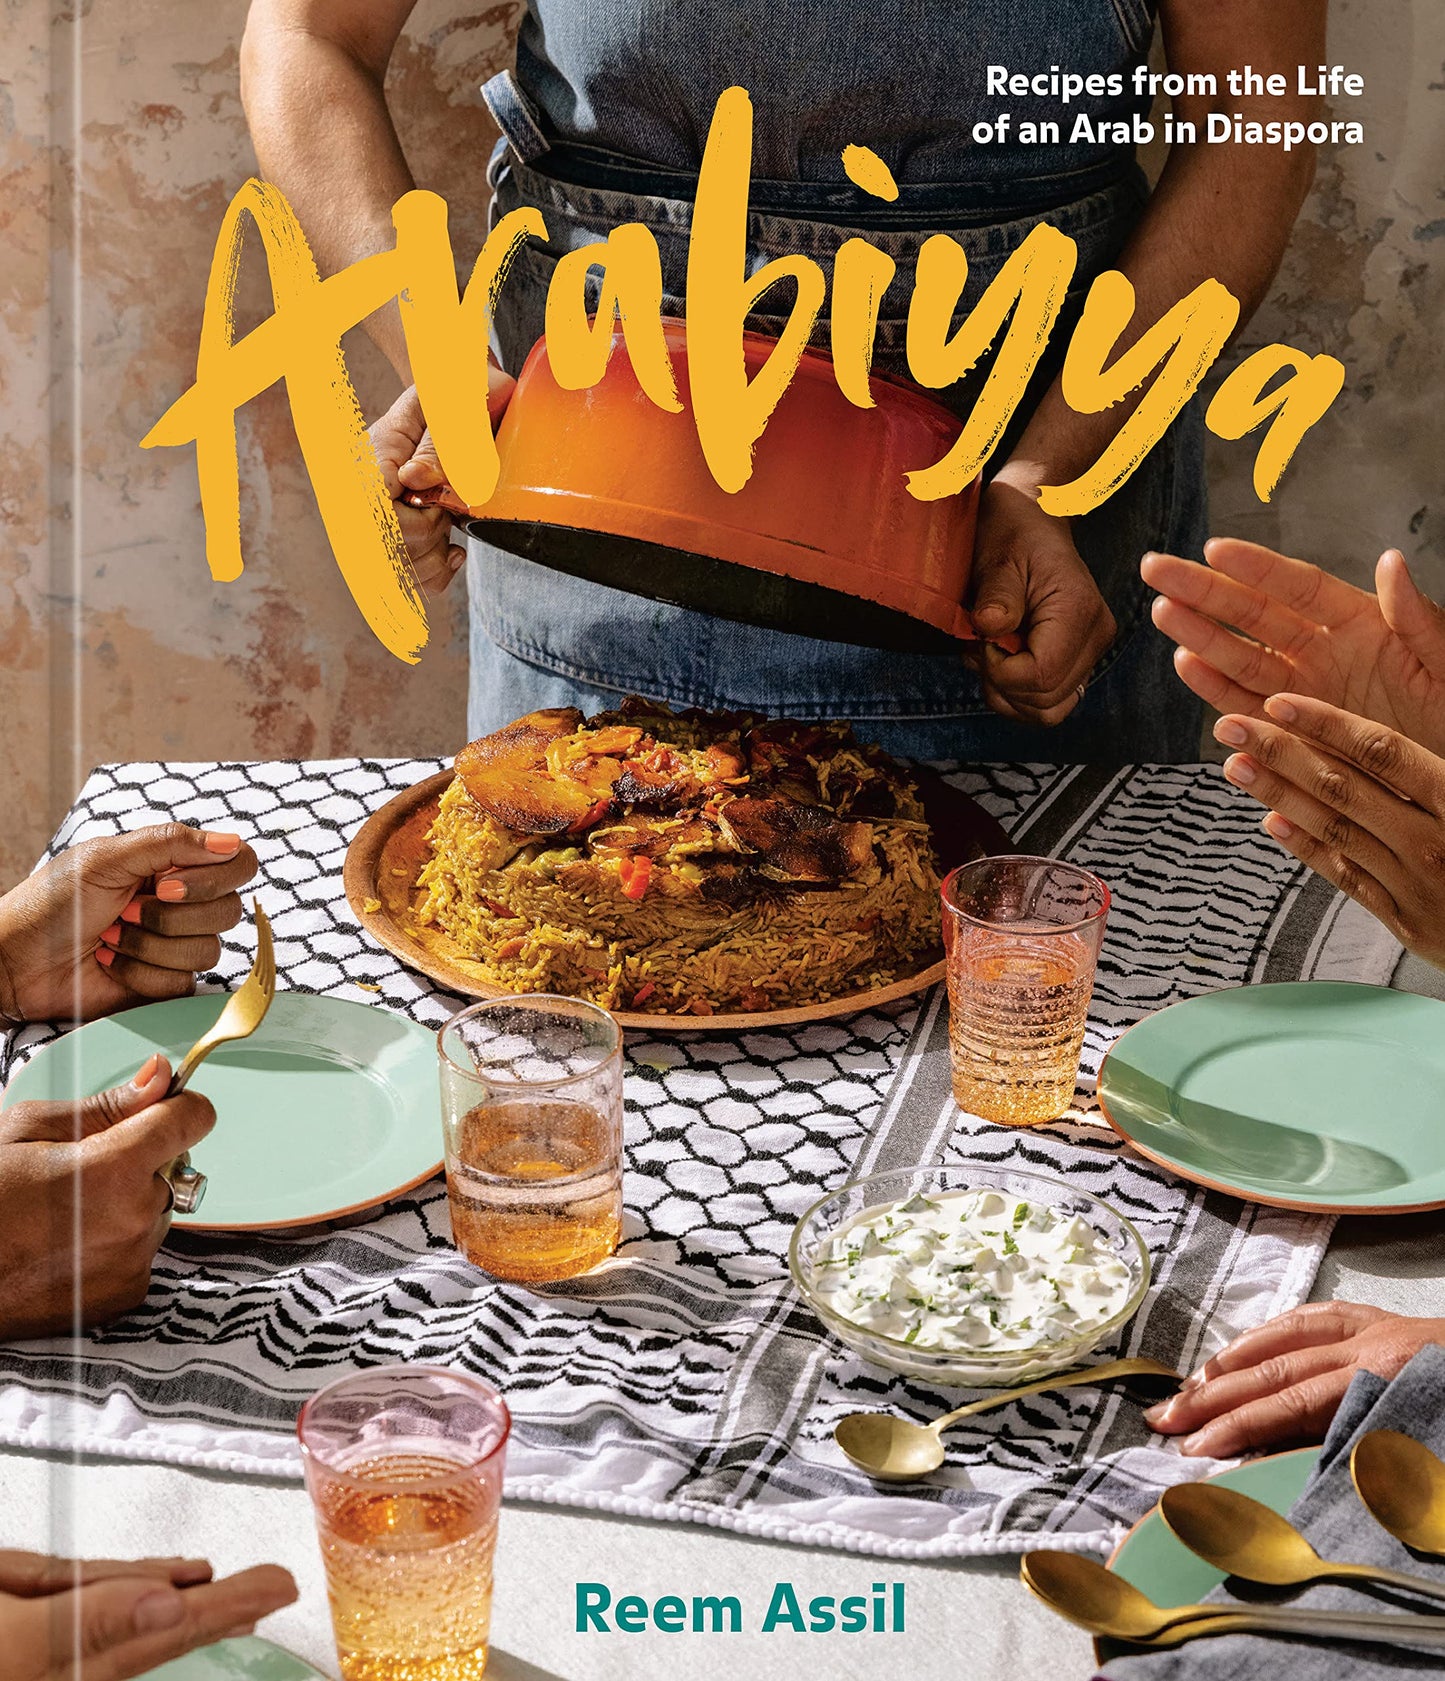 Arabiyya: Recipes from the Life of an Arab in Diaspora, by Reem Assil